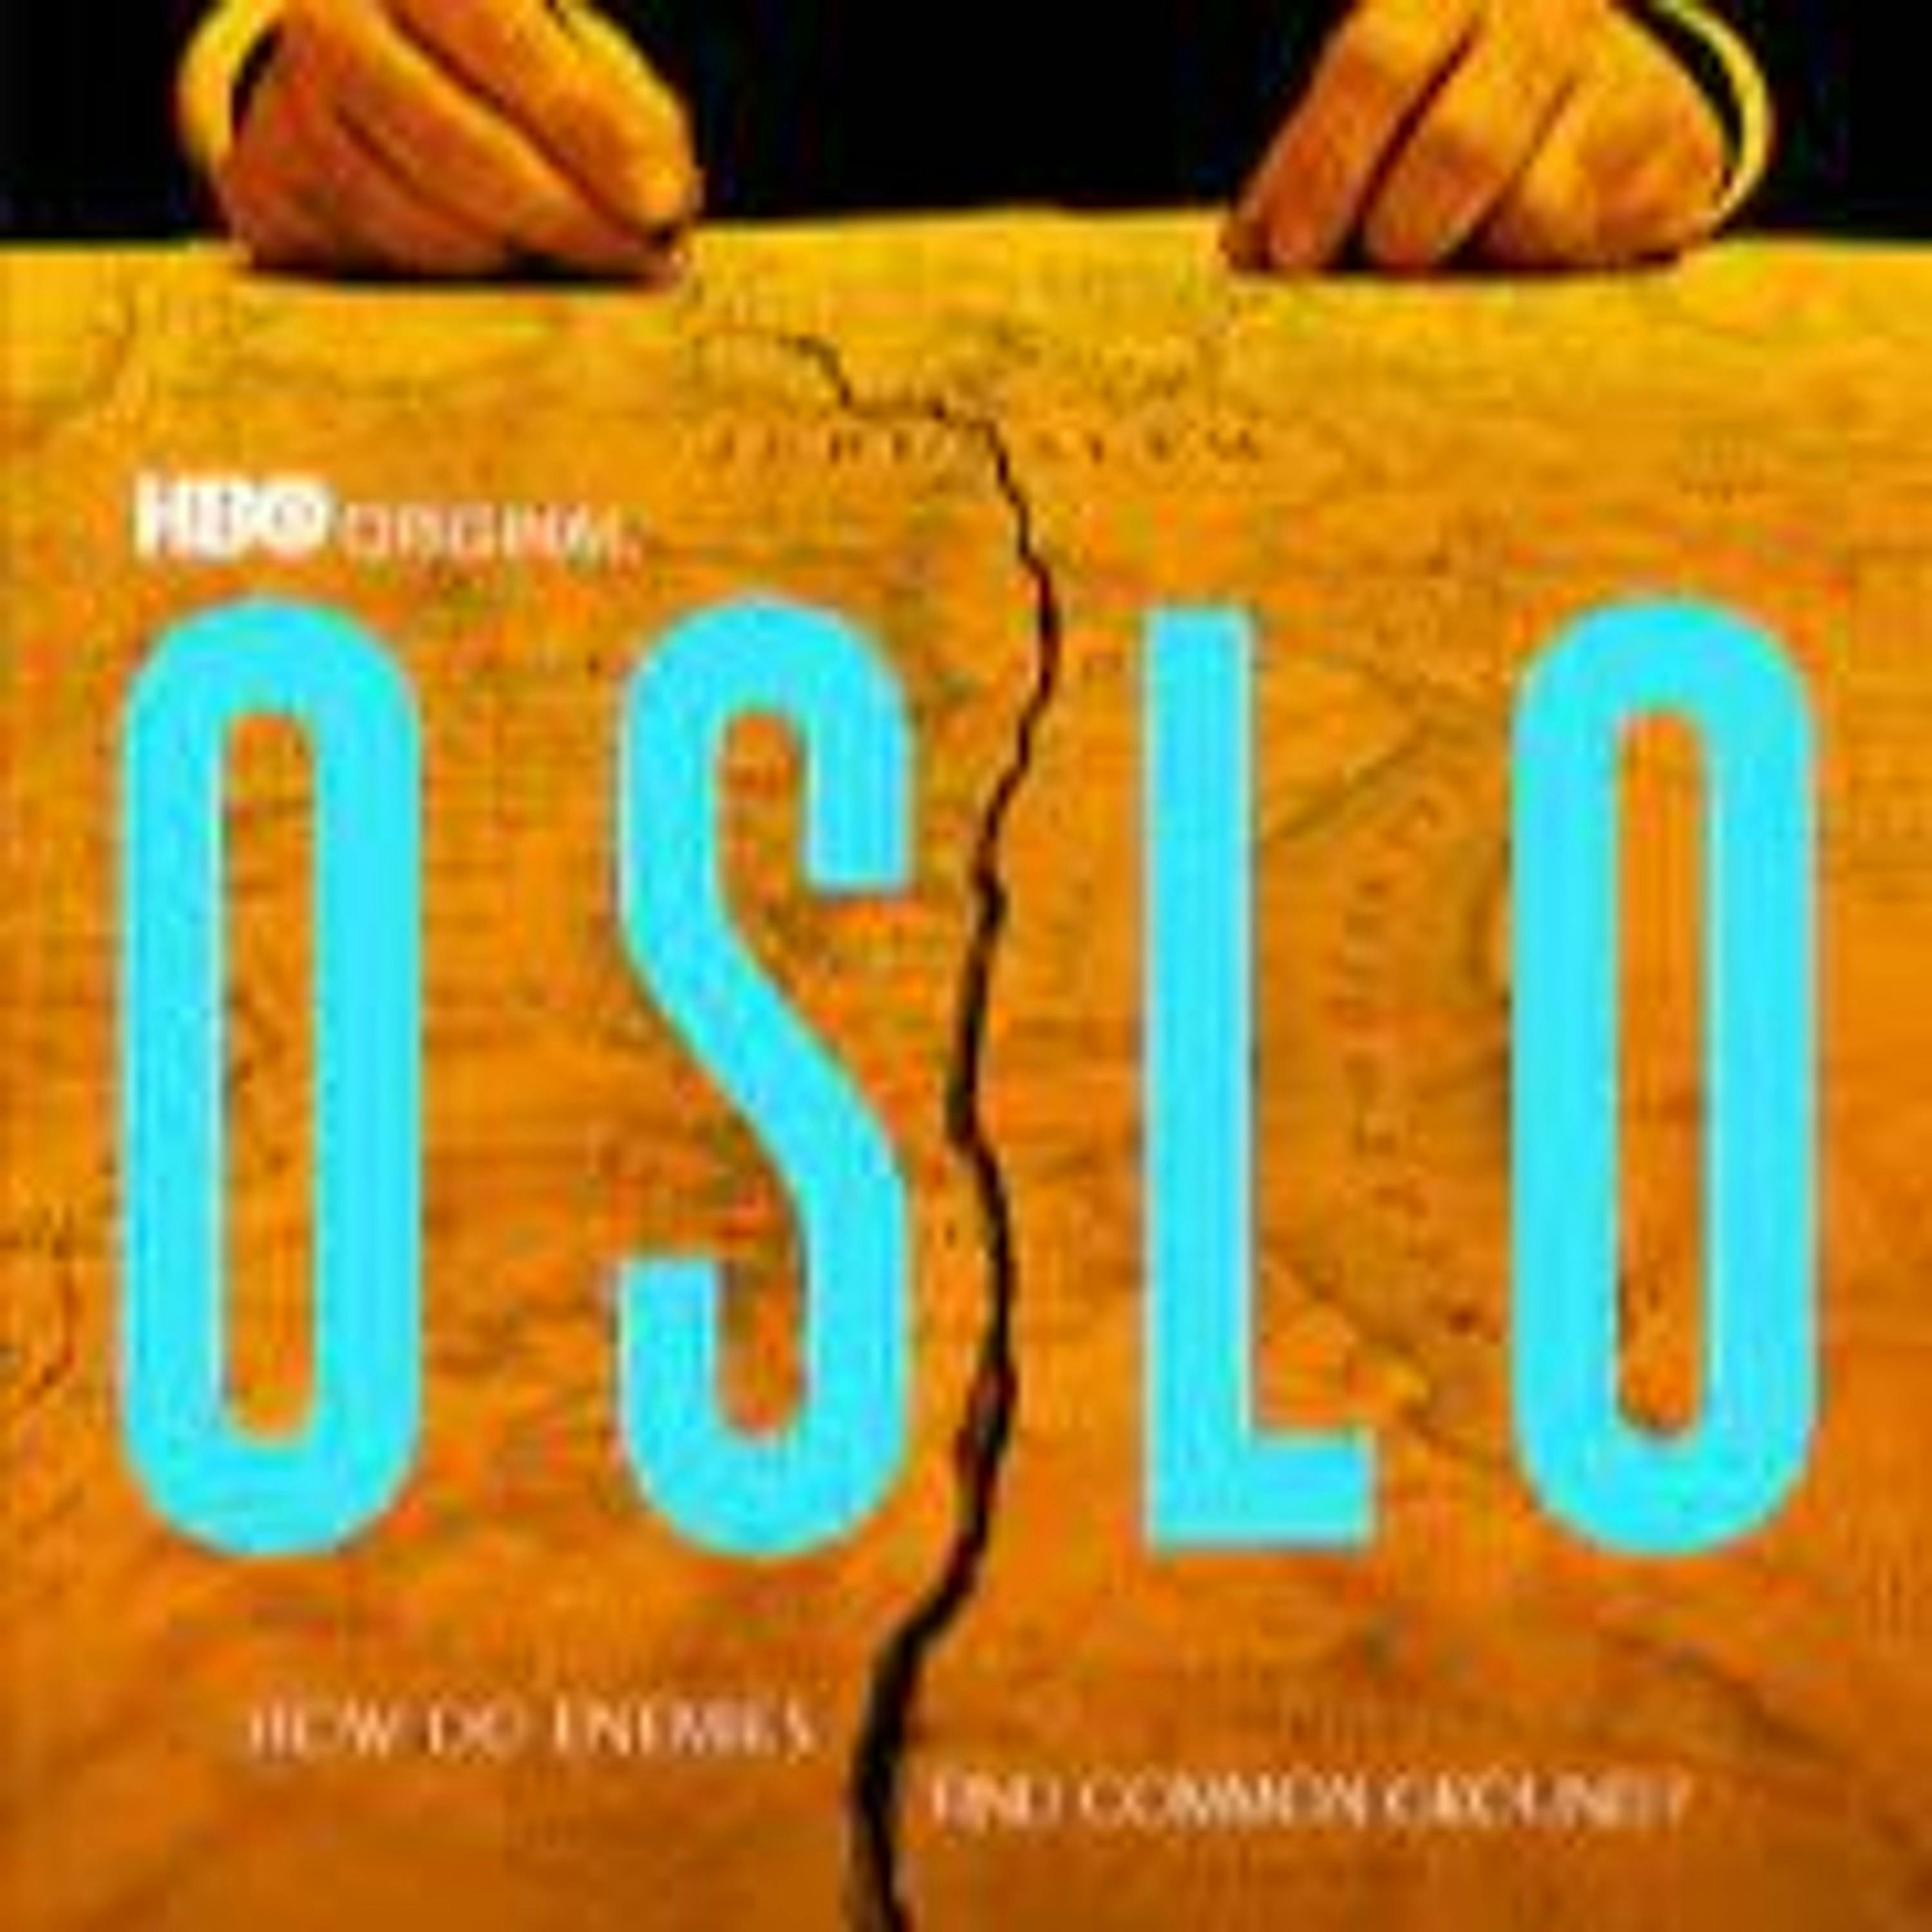 Movie Review: Oslo